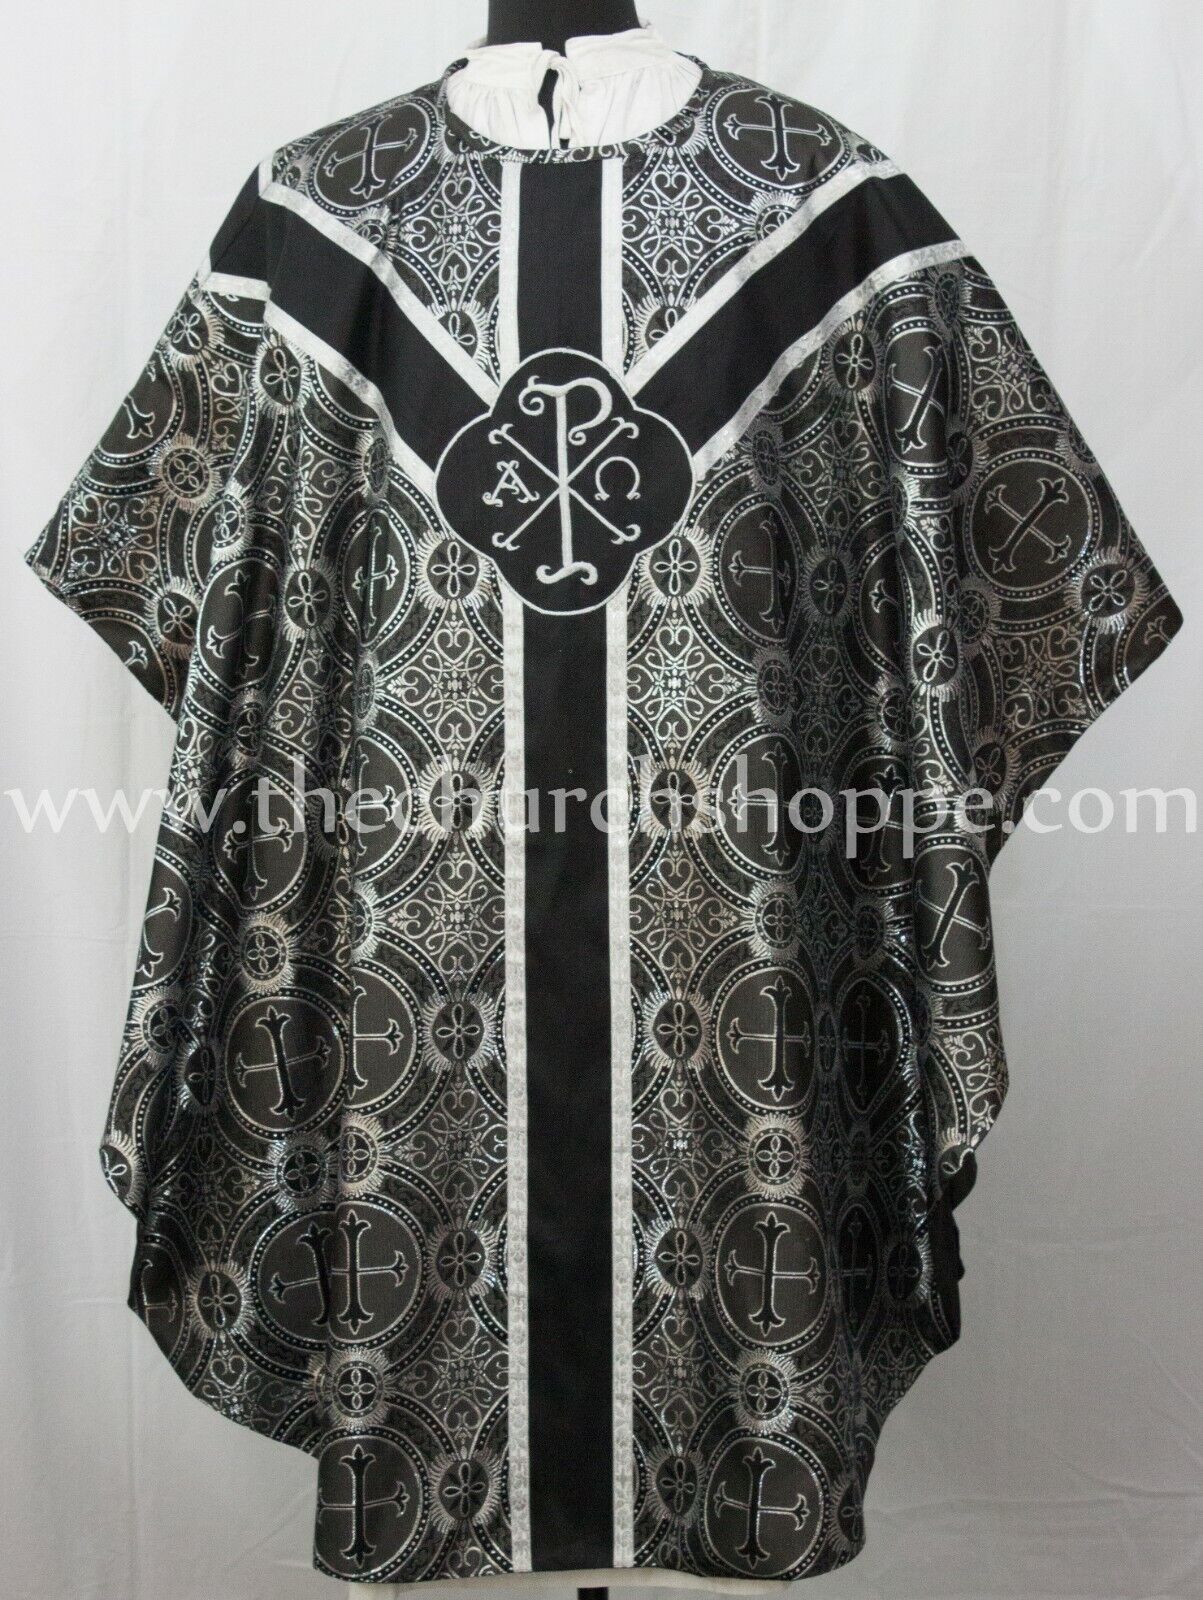 Black Silver gothic vestment,stole & 5pc mass set Gothic chasuble,casula,casel